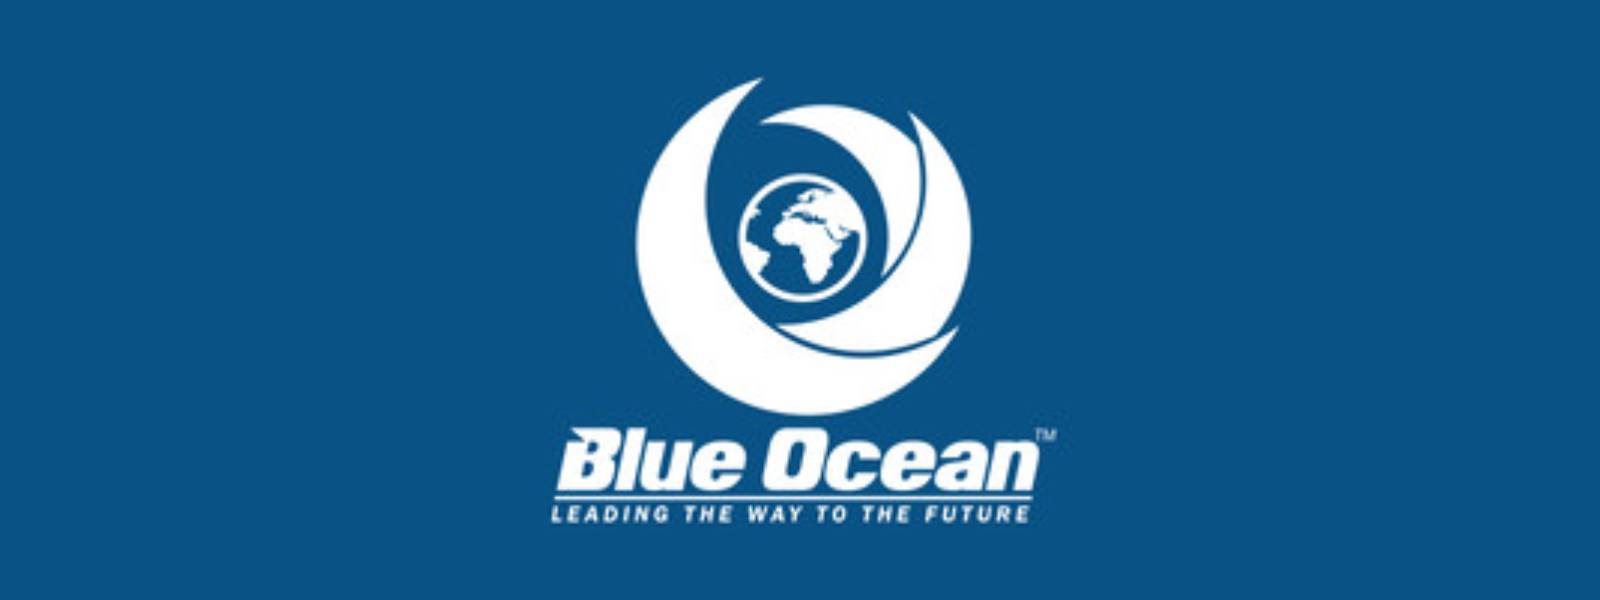 Case against Blue Ocean companies heard in court